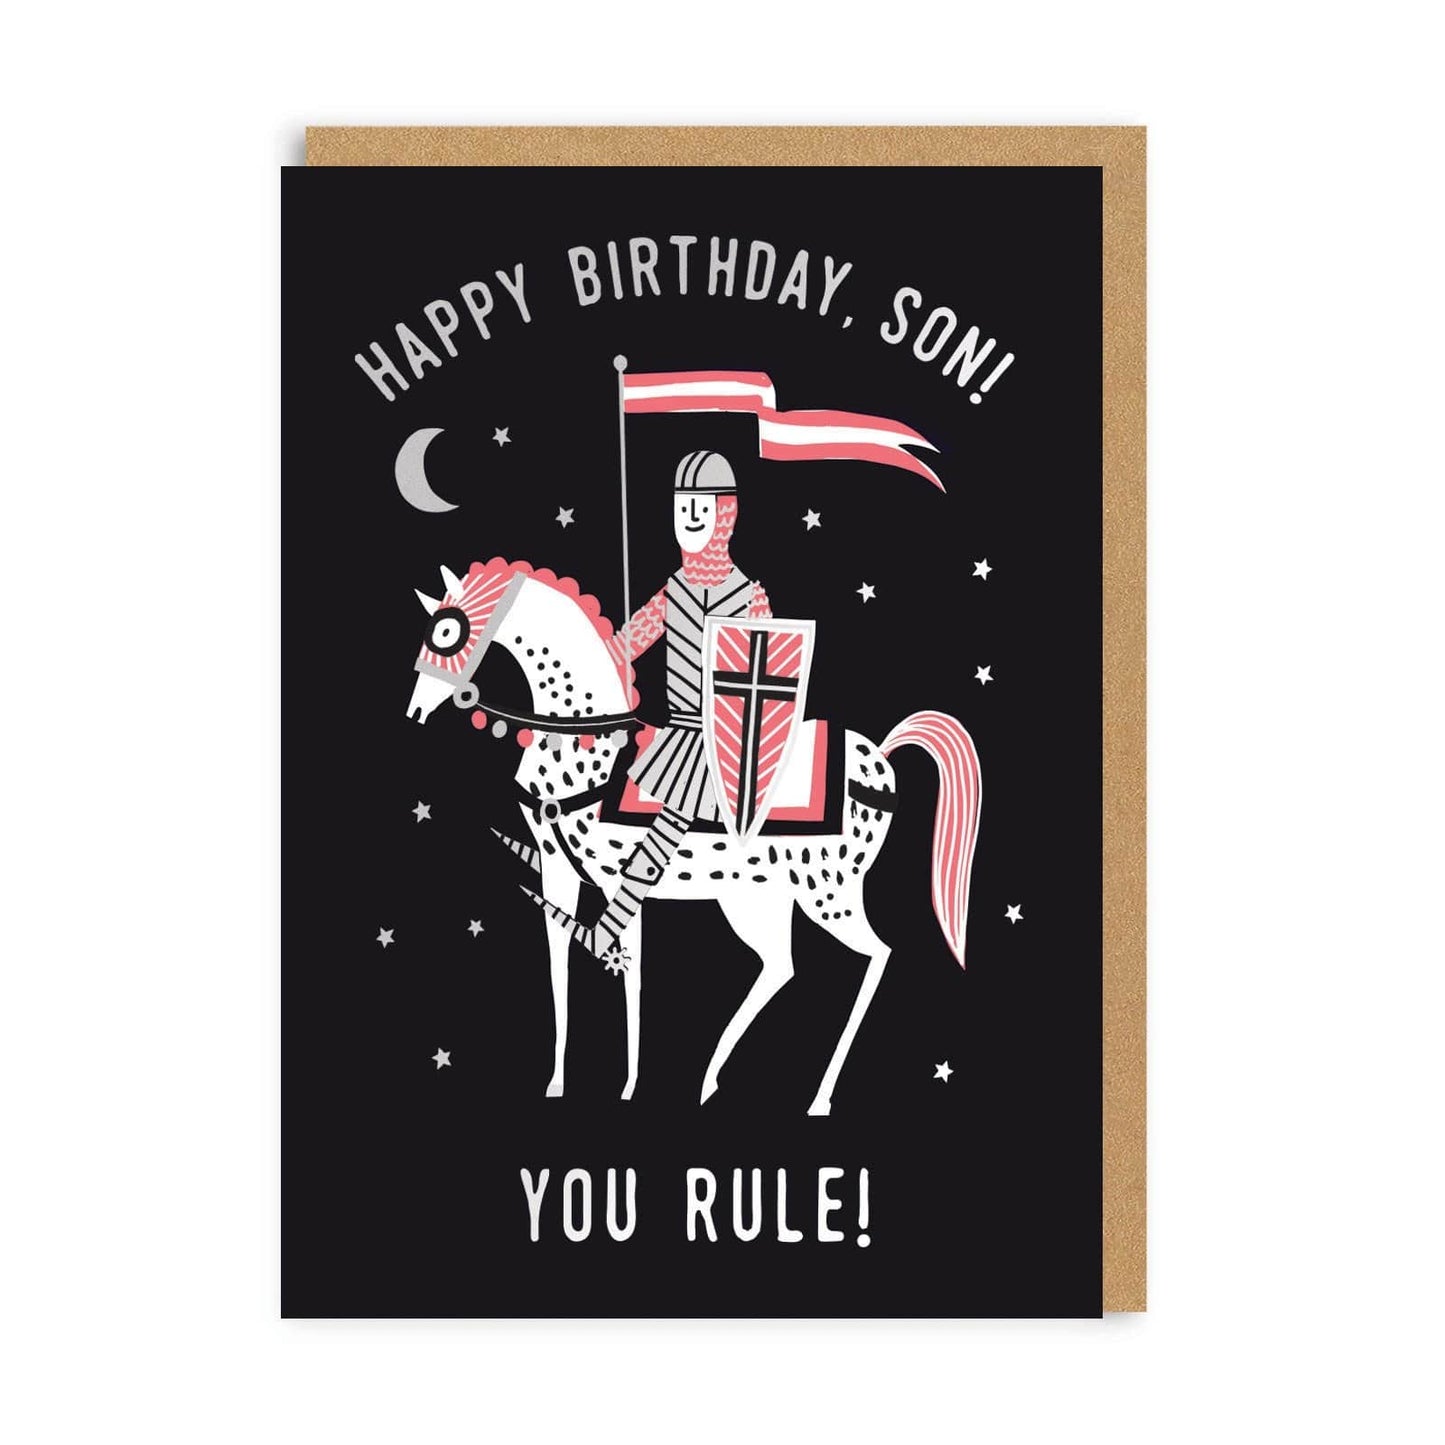 Happy Birthday Son. You Rule! Greeting Card